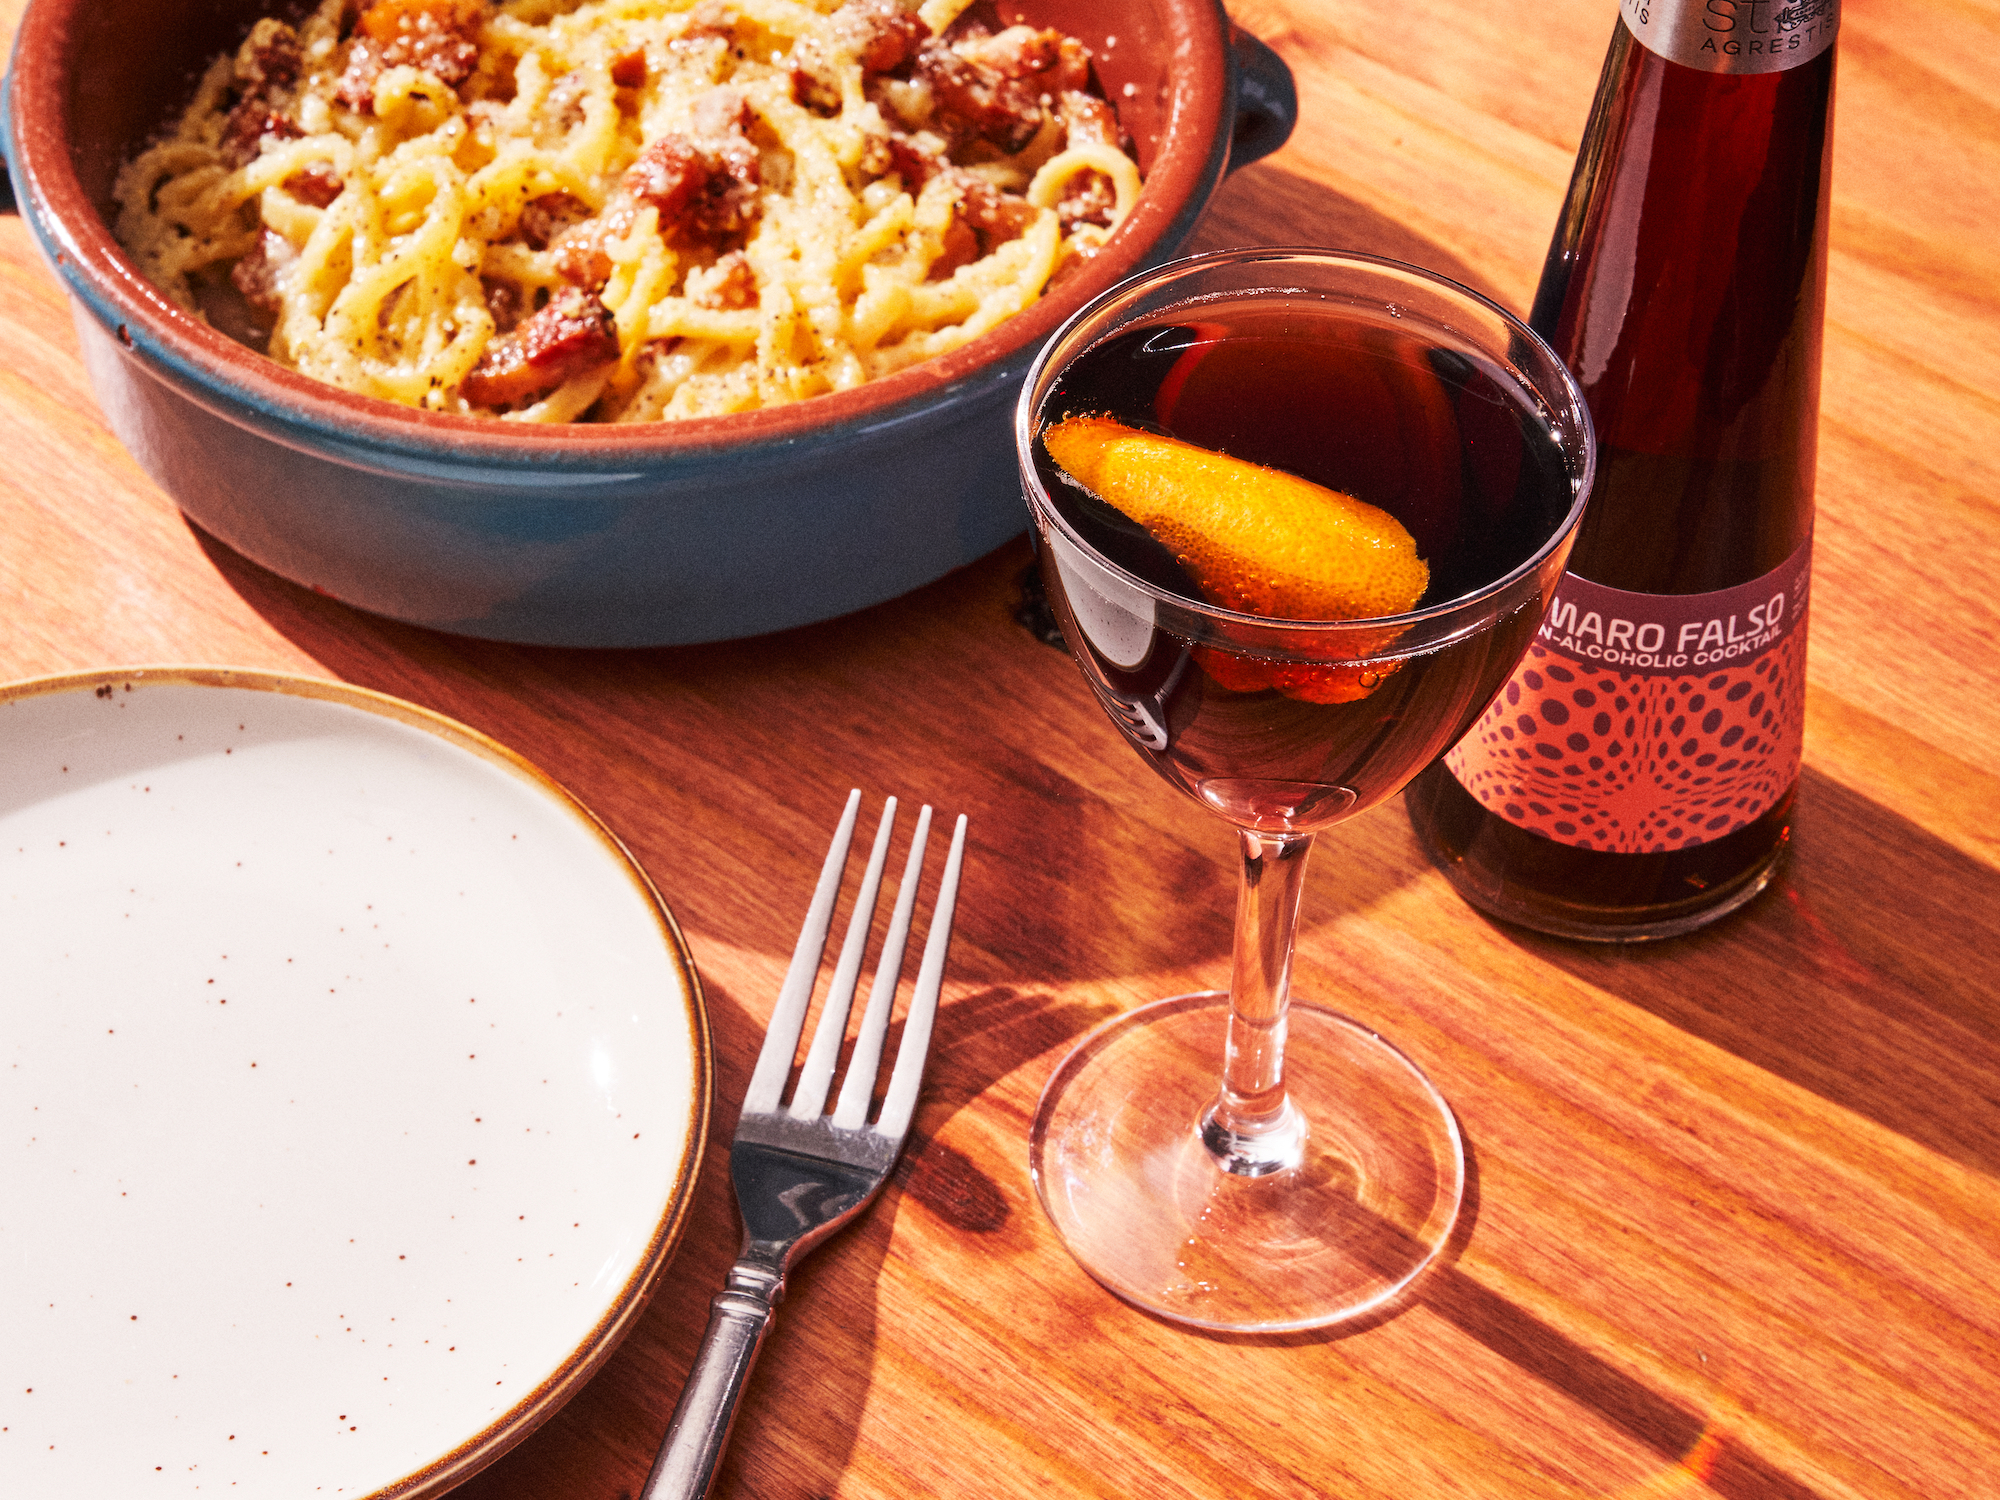 Amaro falso bottle, mocktail and bowl of pasta